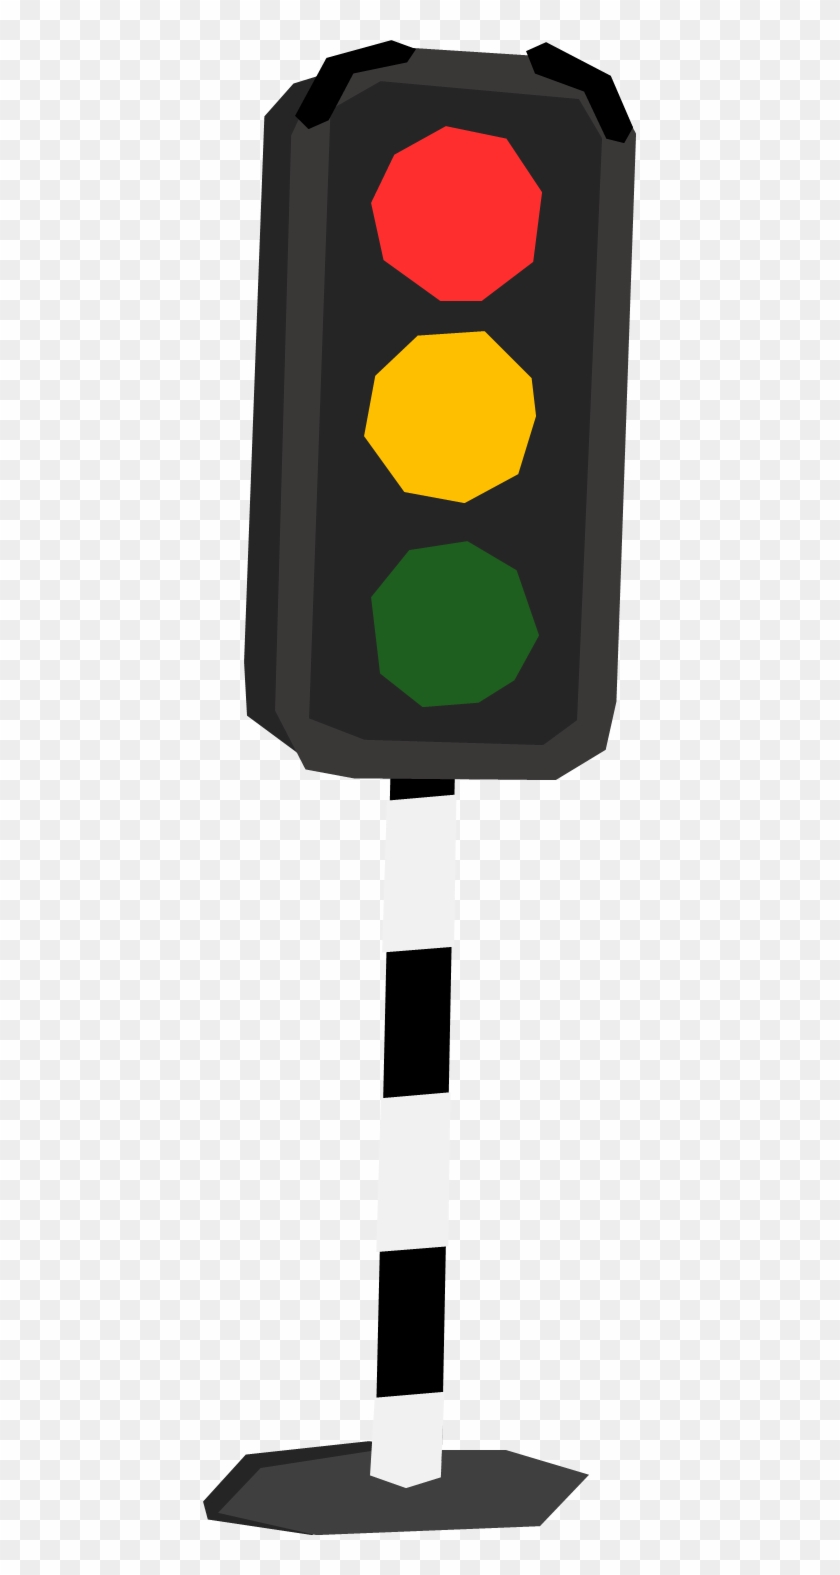 Traffic Lights By Samueljellis - Traffic Light Cartoon Png #444025